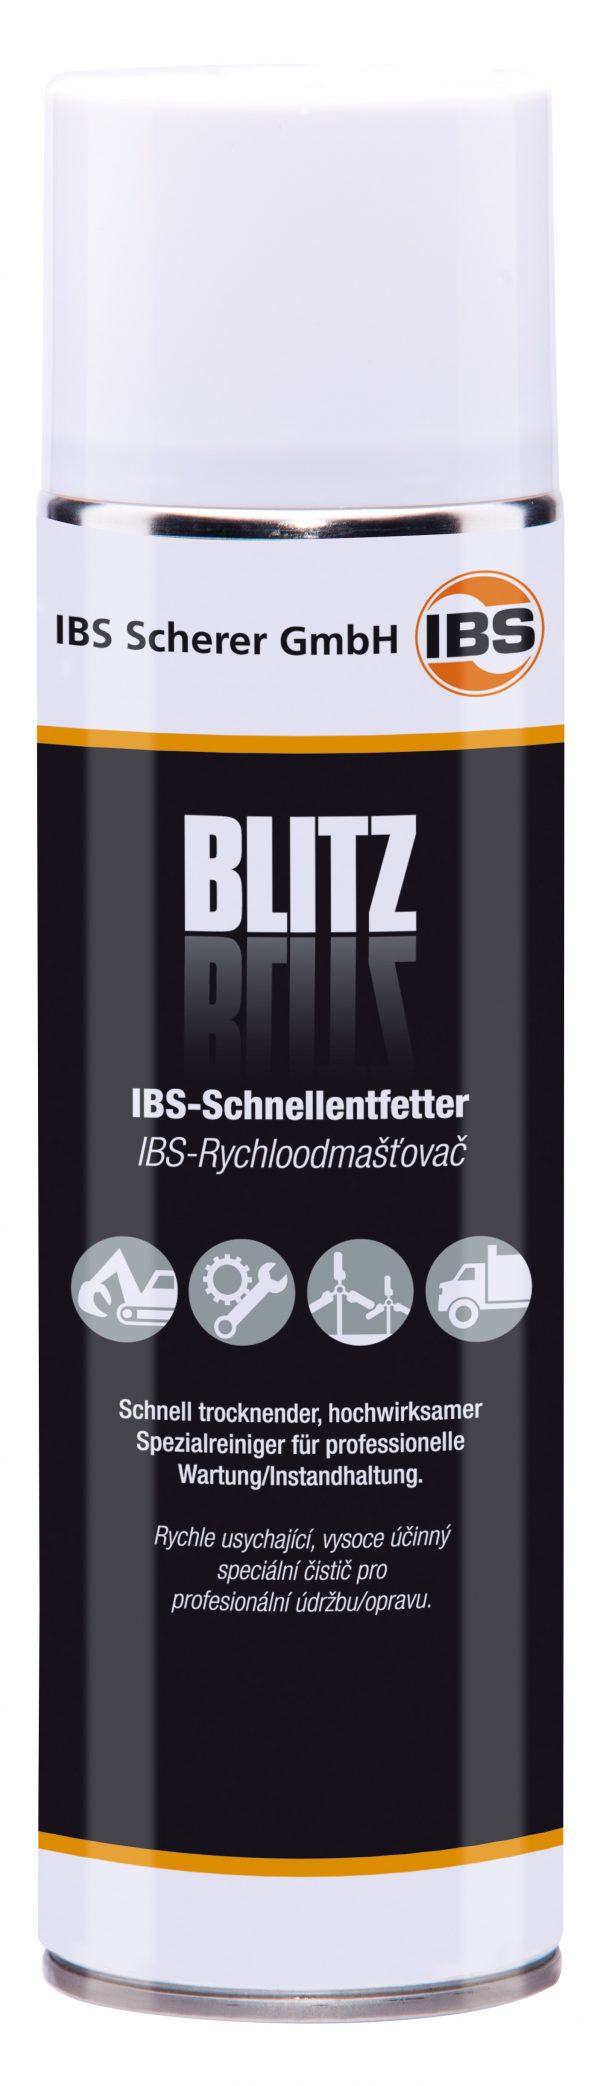 IBS-Rychloodmašťovač Blitz